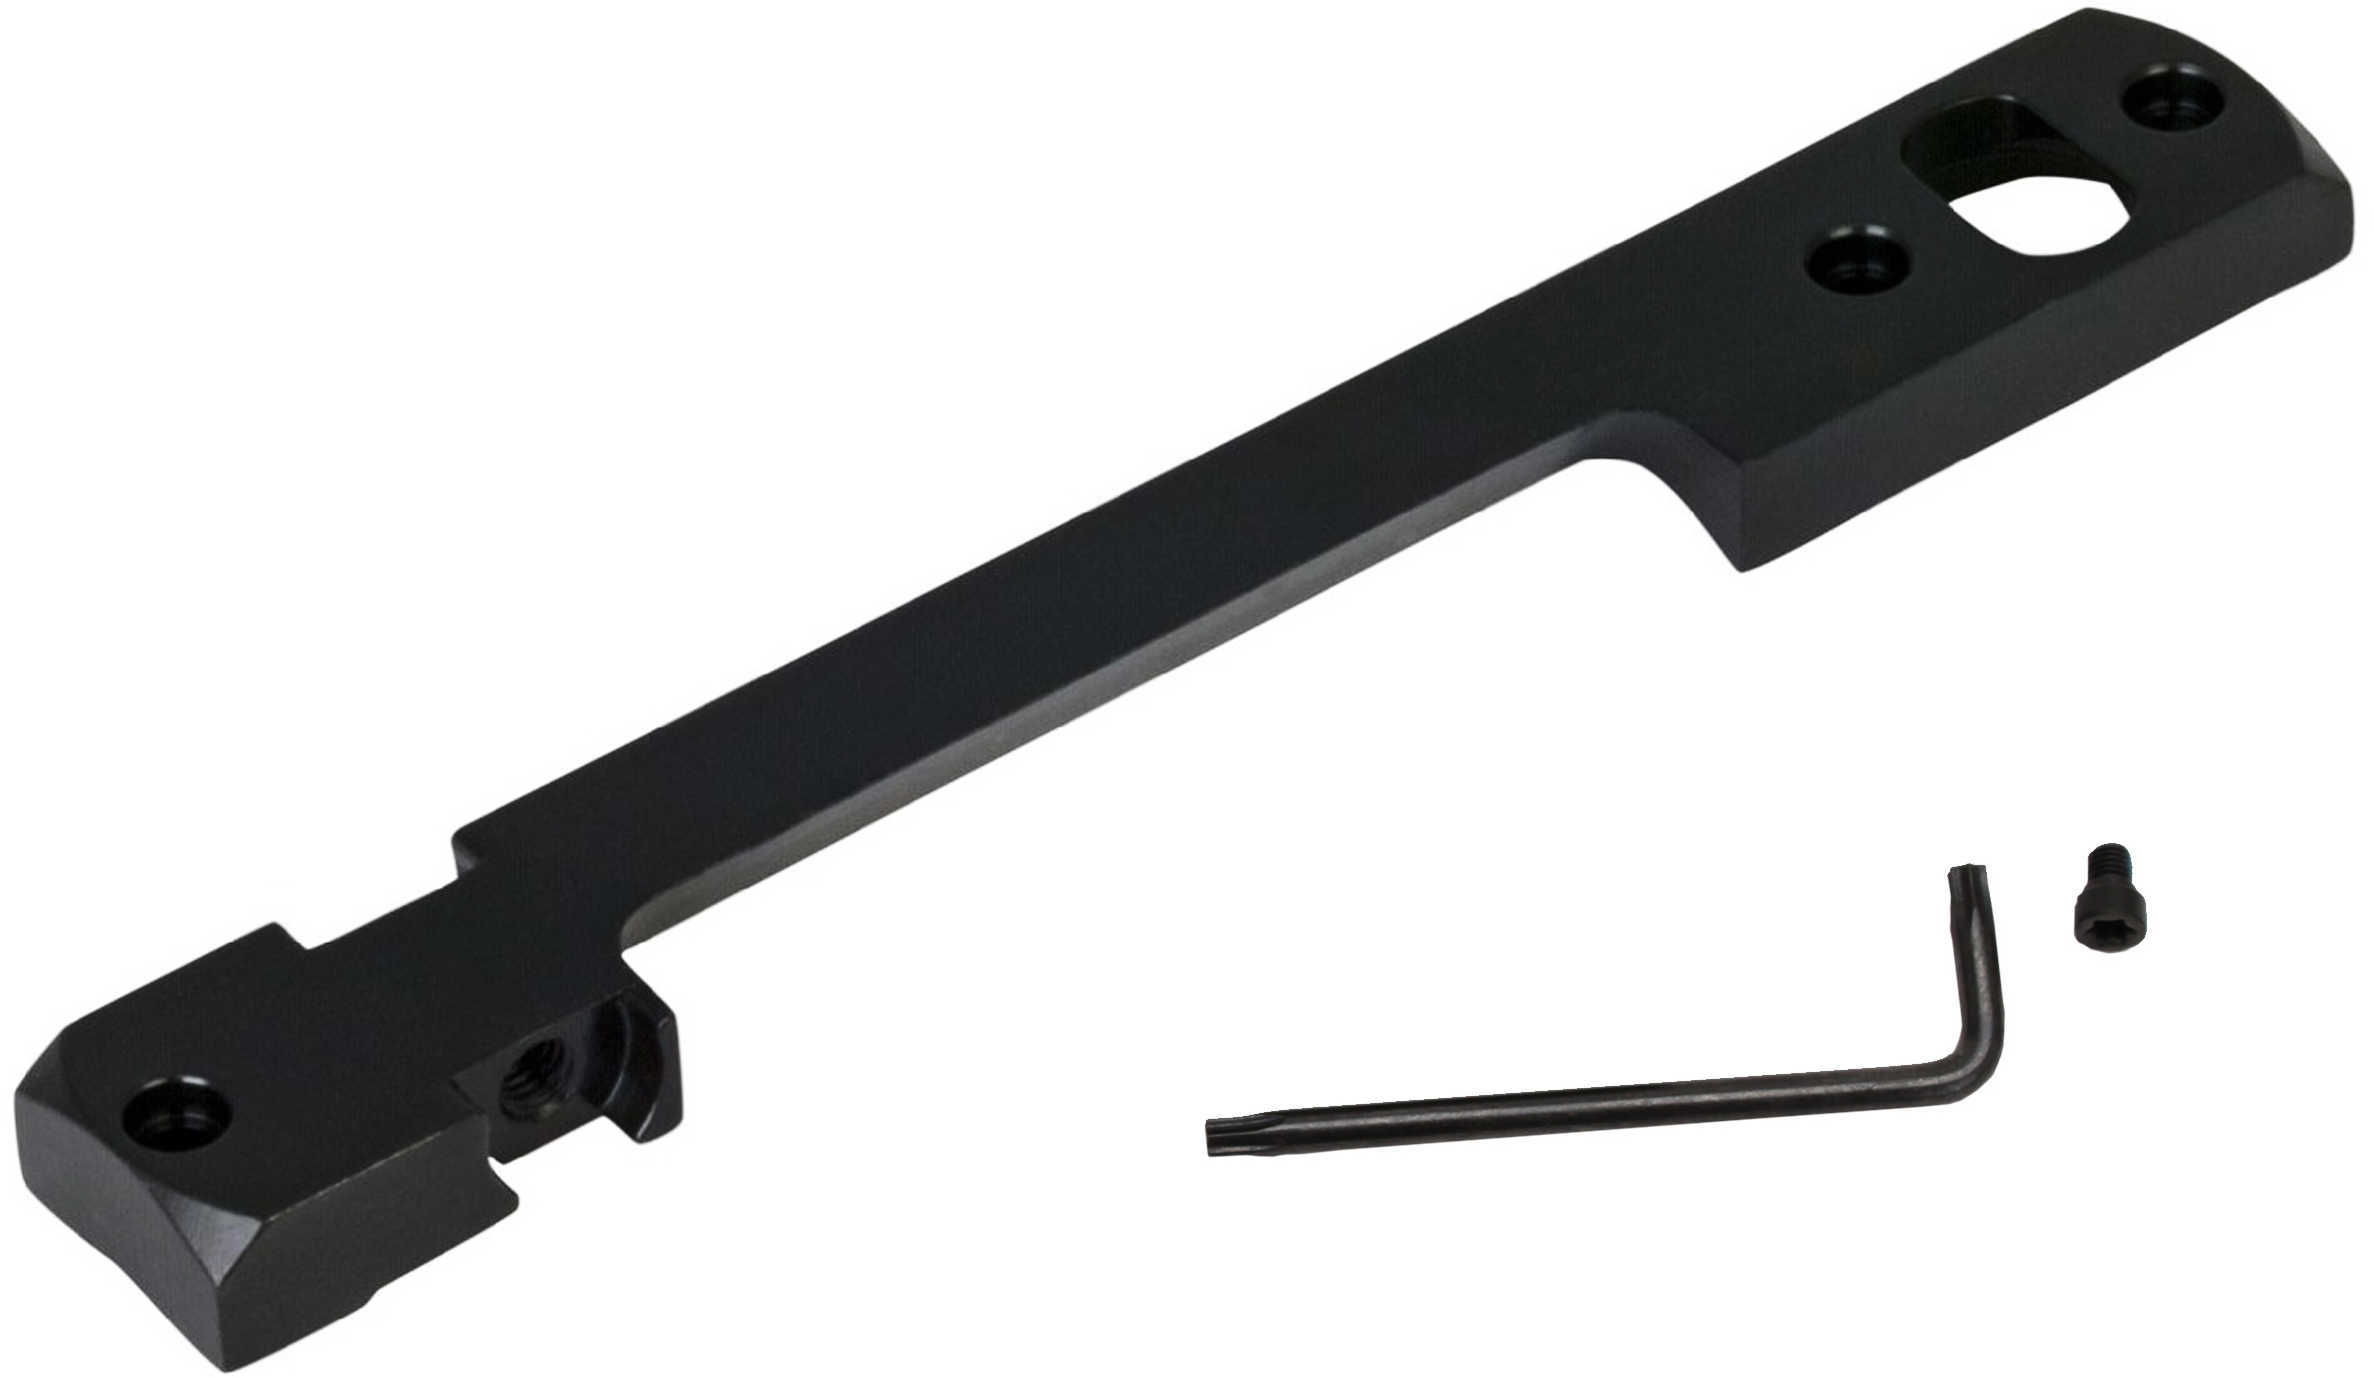 Leupold Std One-Piece Base Remington 700 RH-LA, Matte Finish Machined Steel Construction - Front accepts Dovetail Ring -